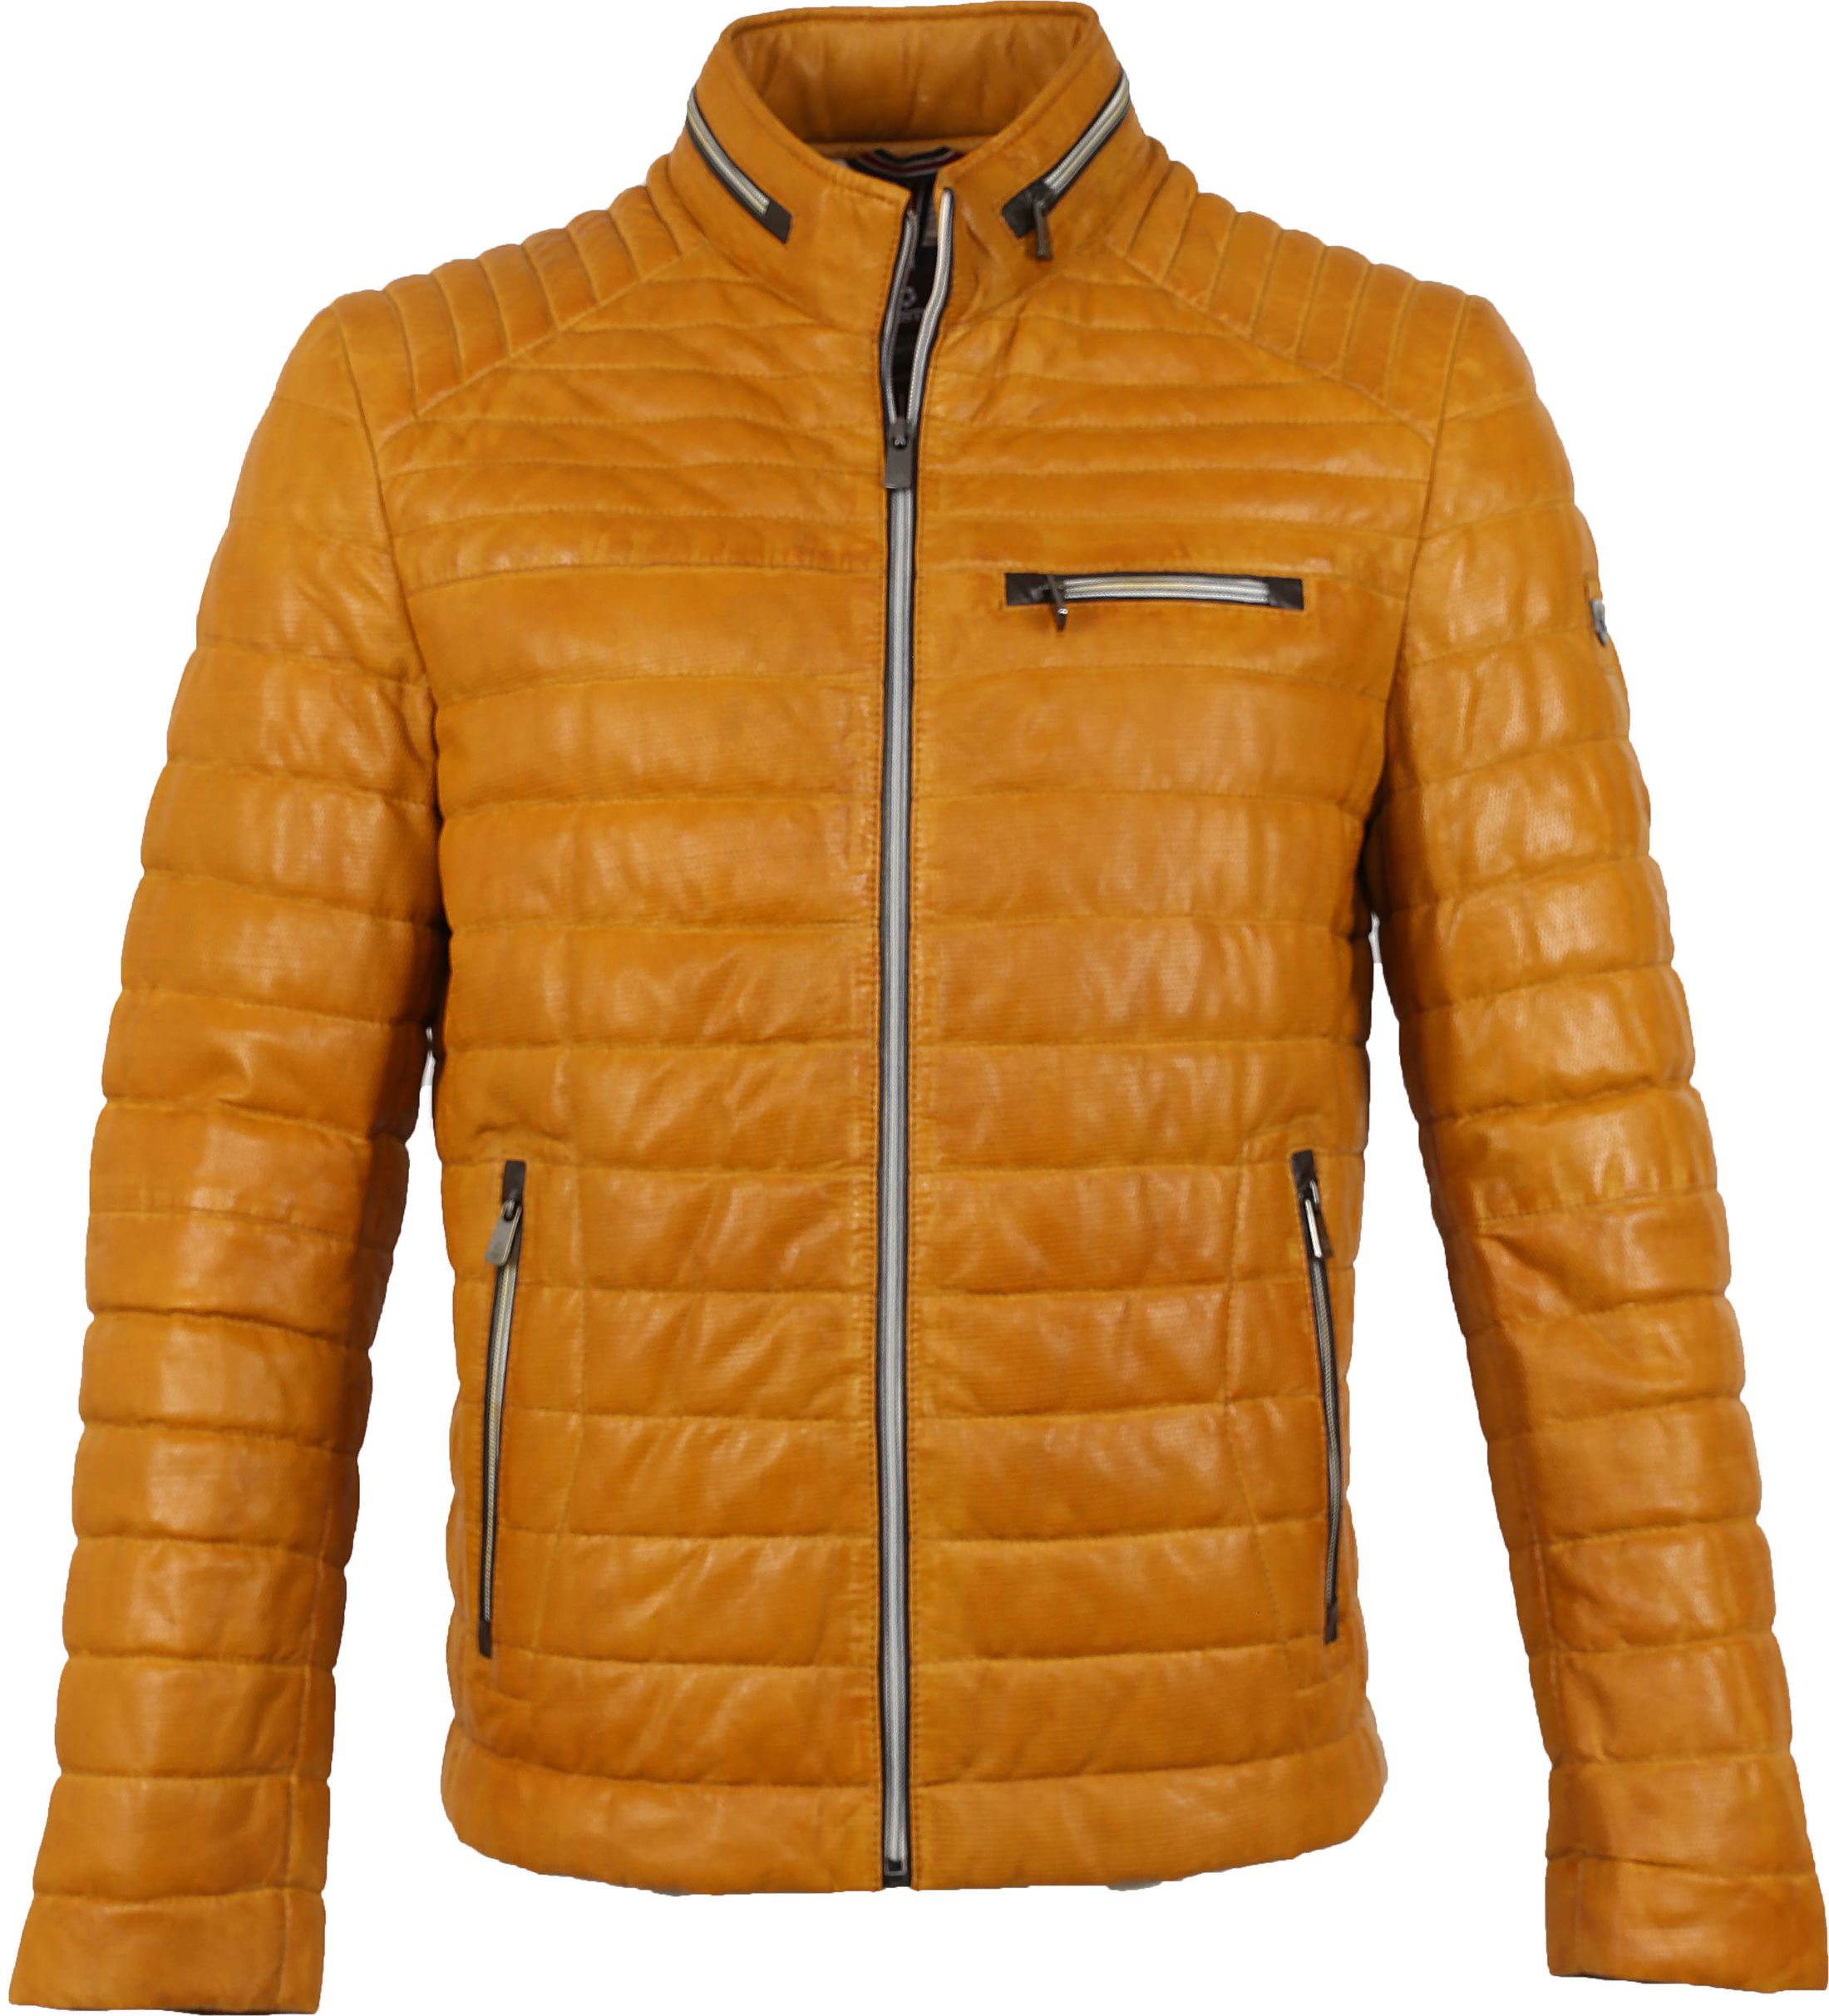 Milestone Terenzio Leather Jacket Yellow size 40-R